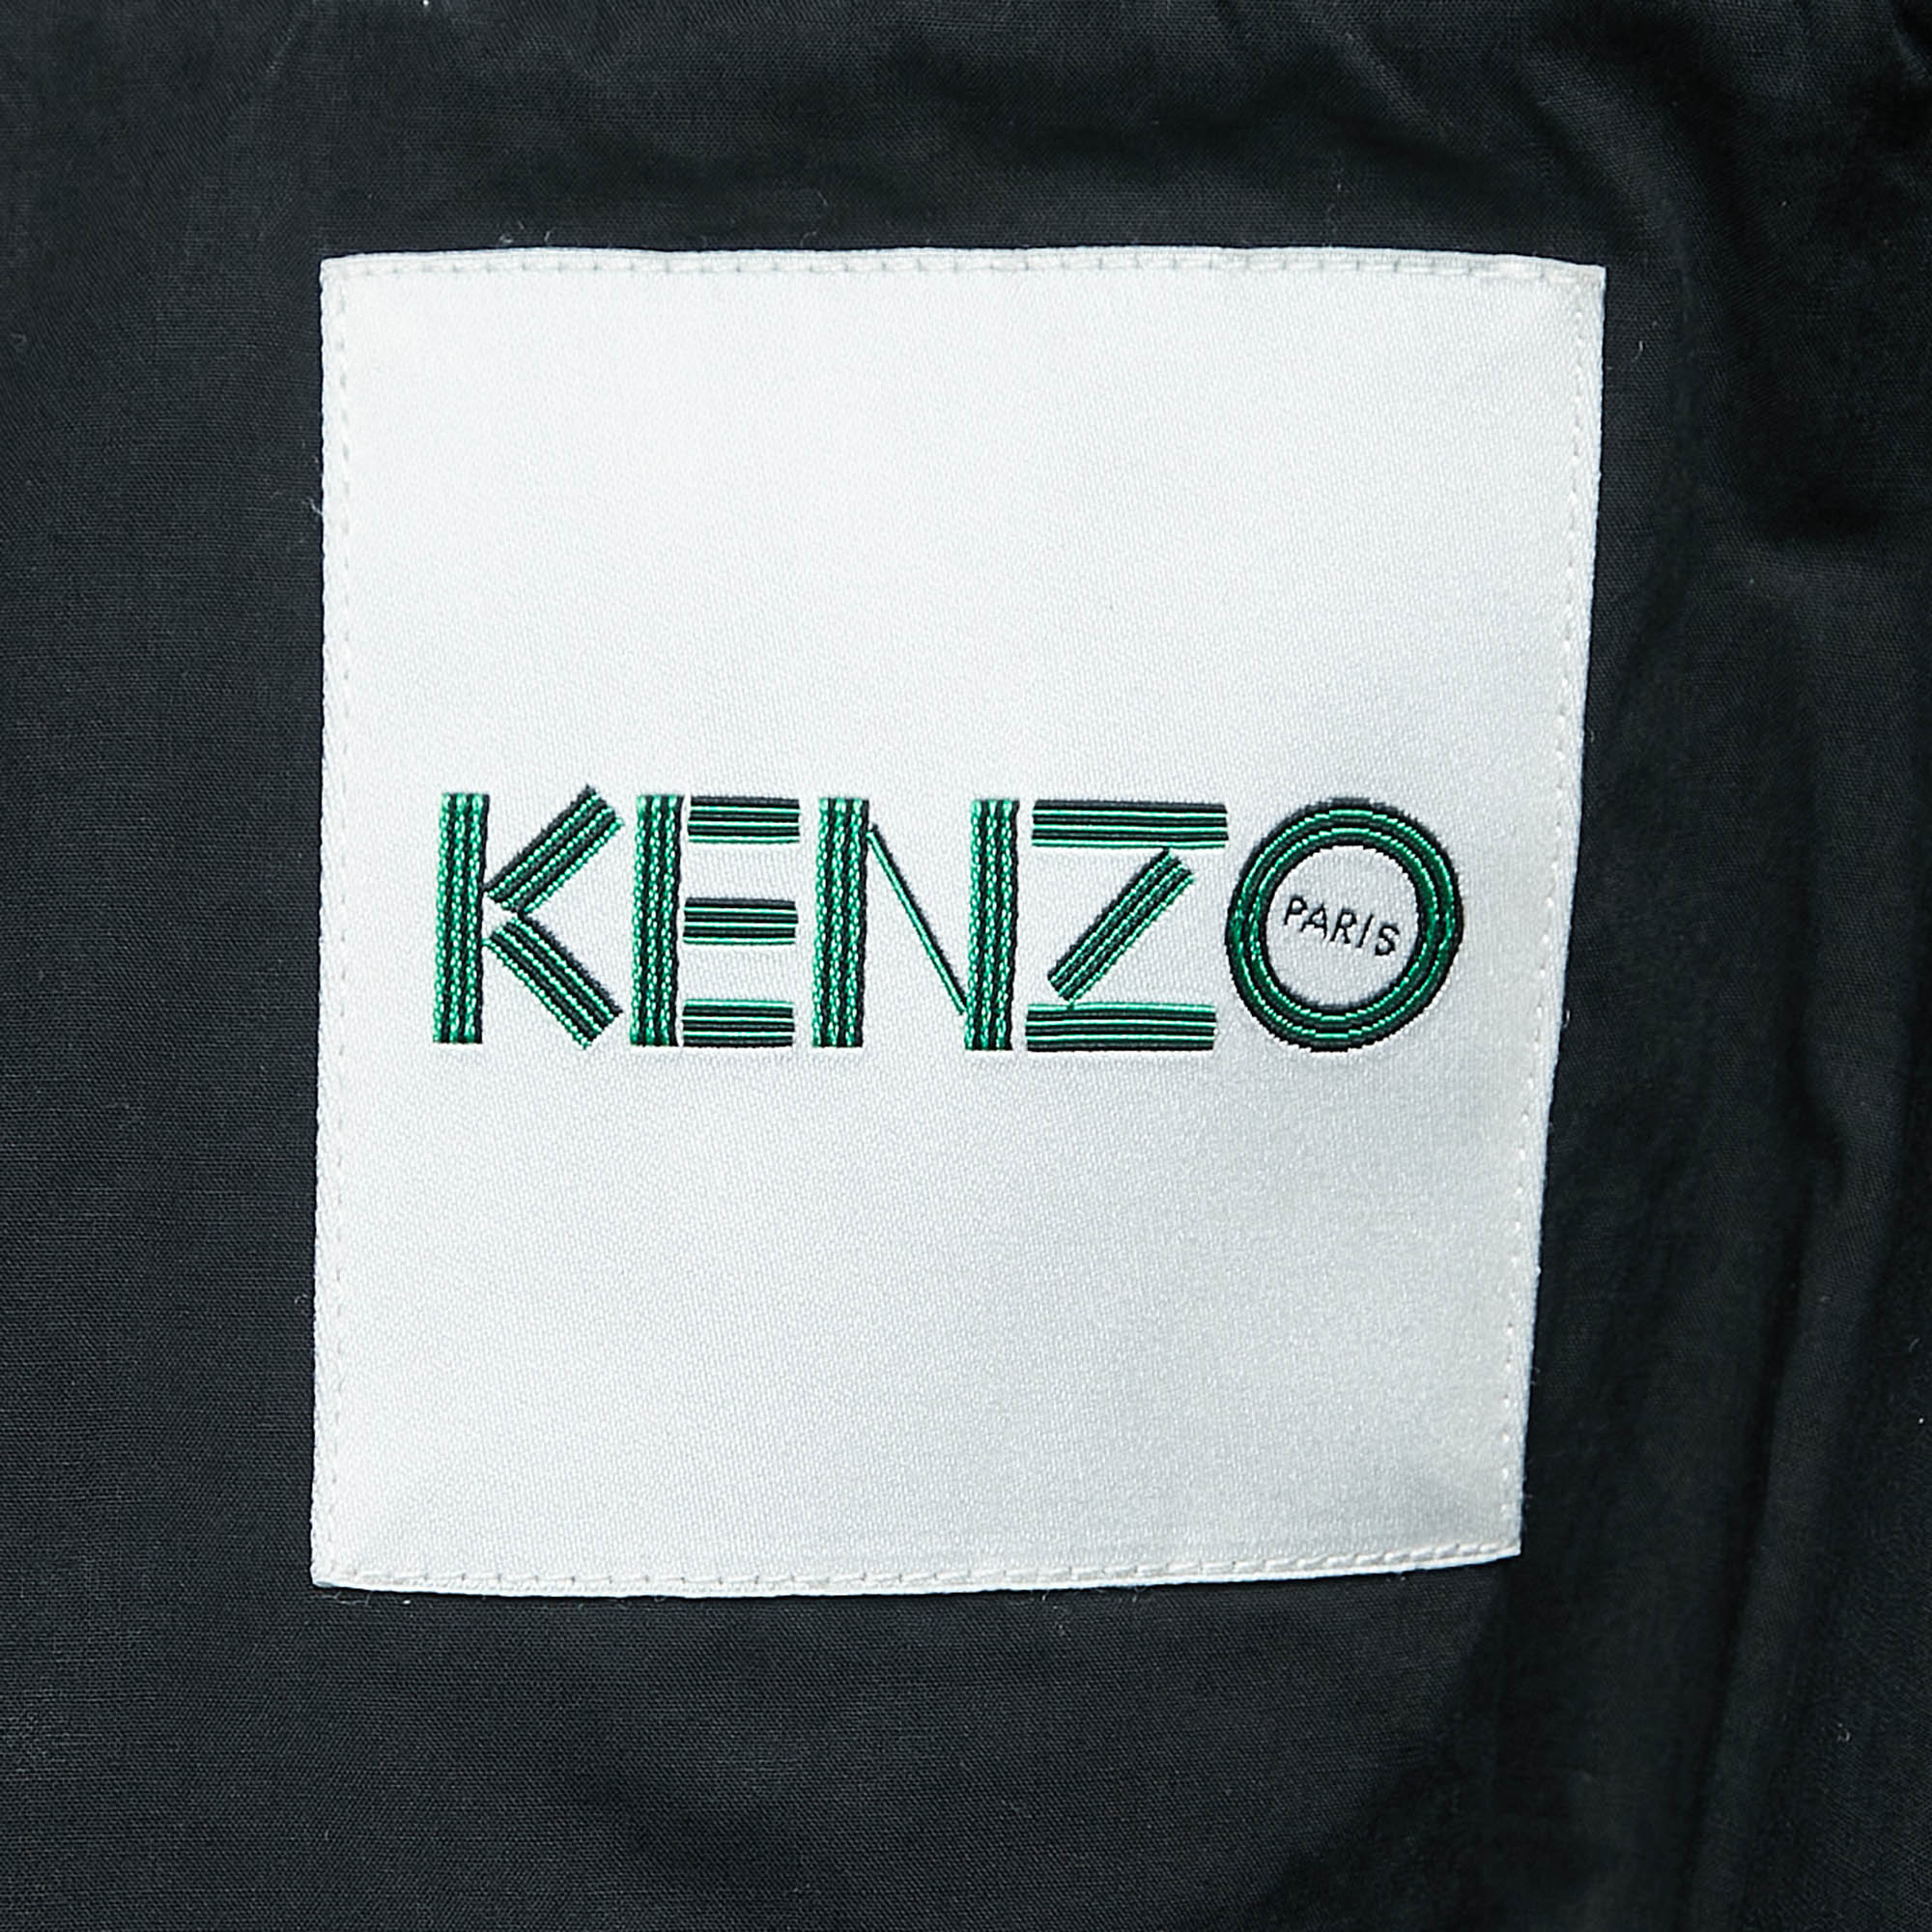 Kenzo Navy Blue Gabardine Logo Detailed Zip Front Hooded Jacket S